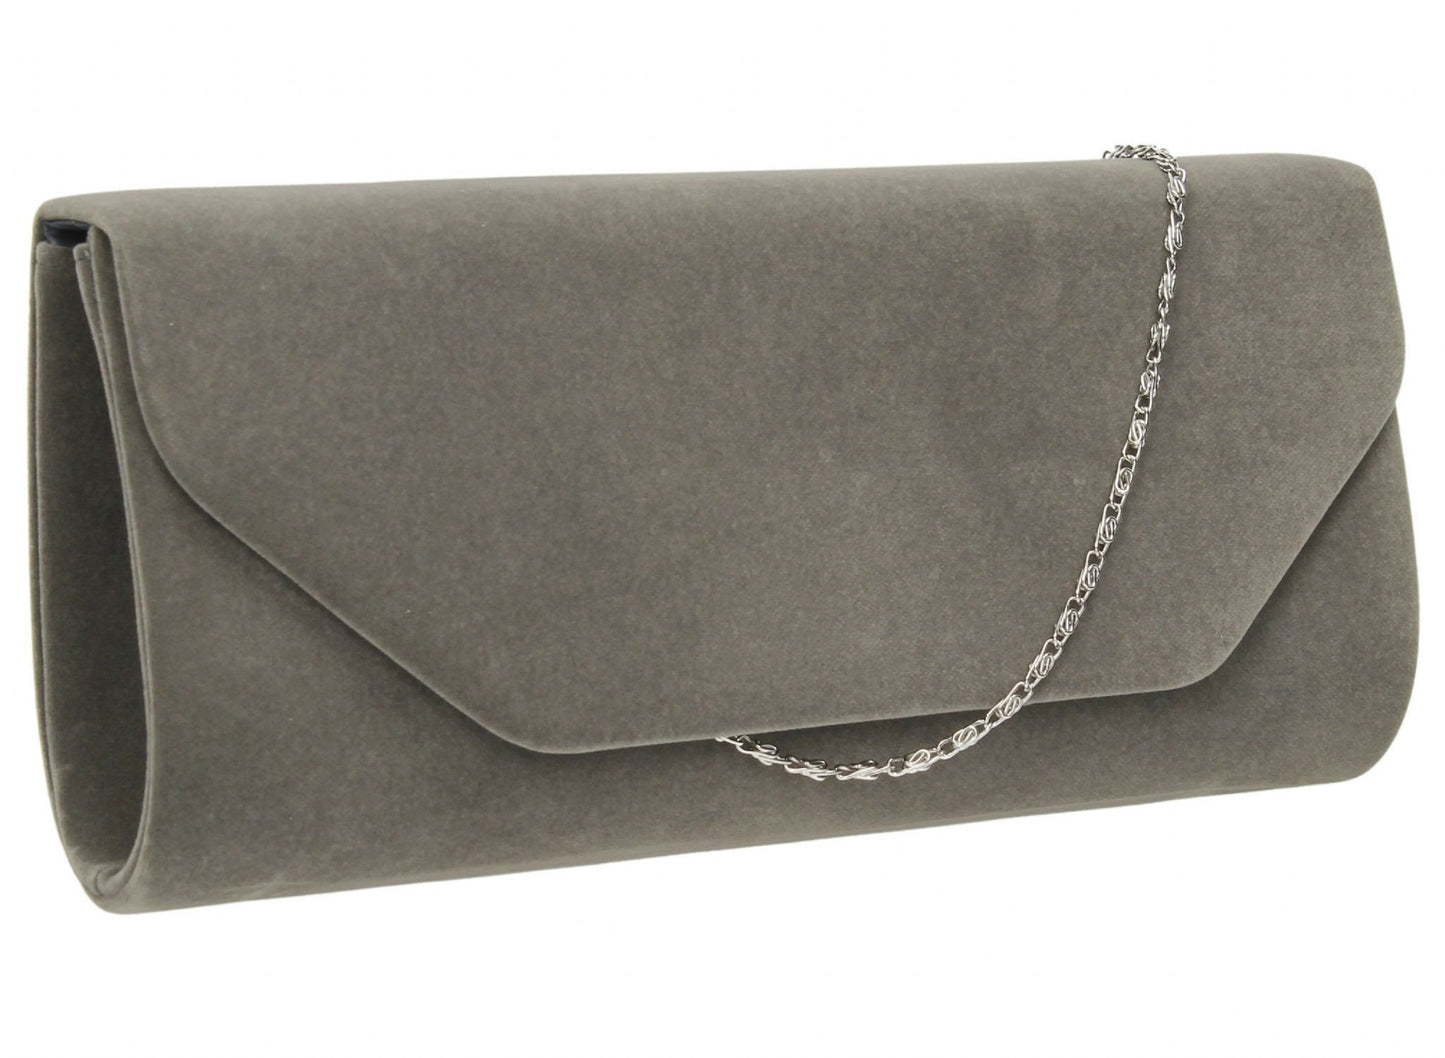 SWANKYSWANS Isabella Velvet Clutch Bag Grey Cute Cheap Clutch Bag For Weddings School and Work